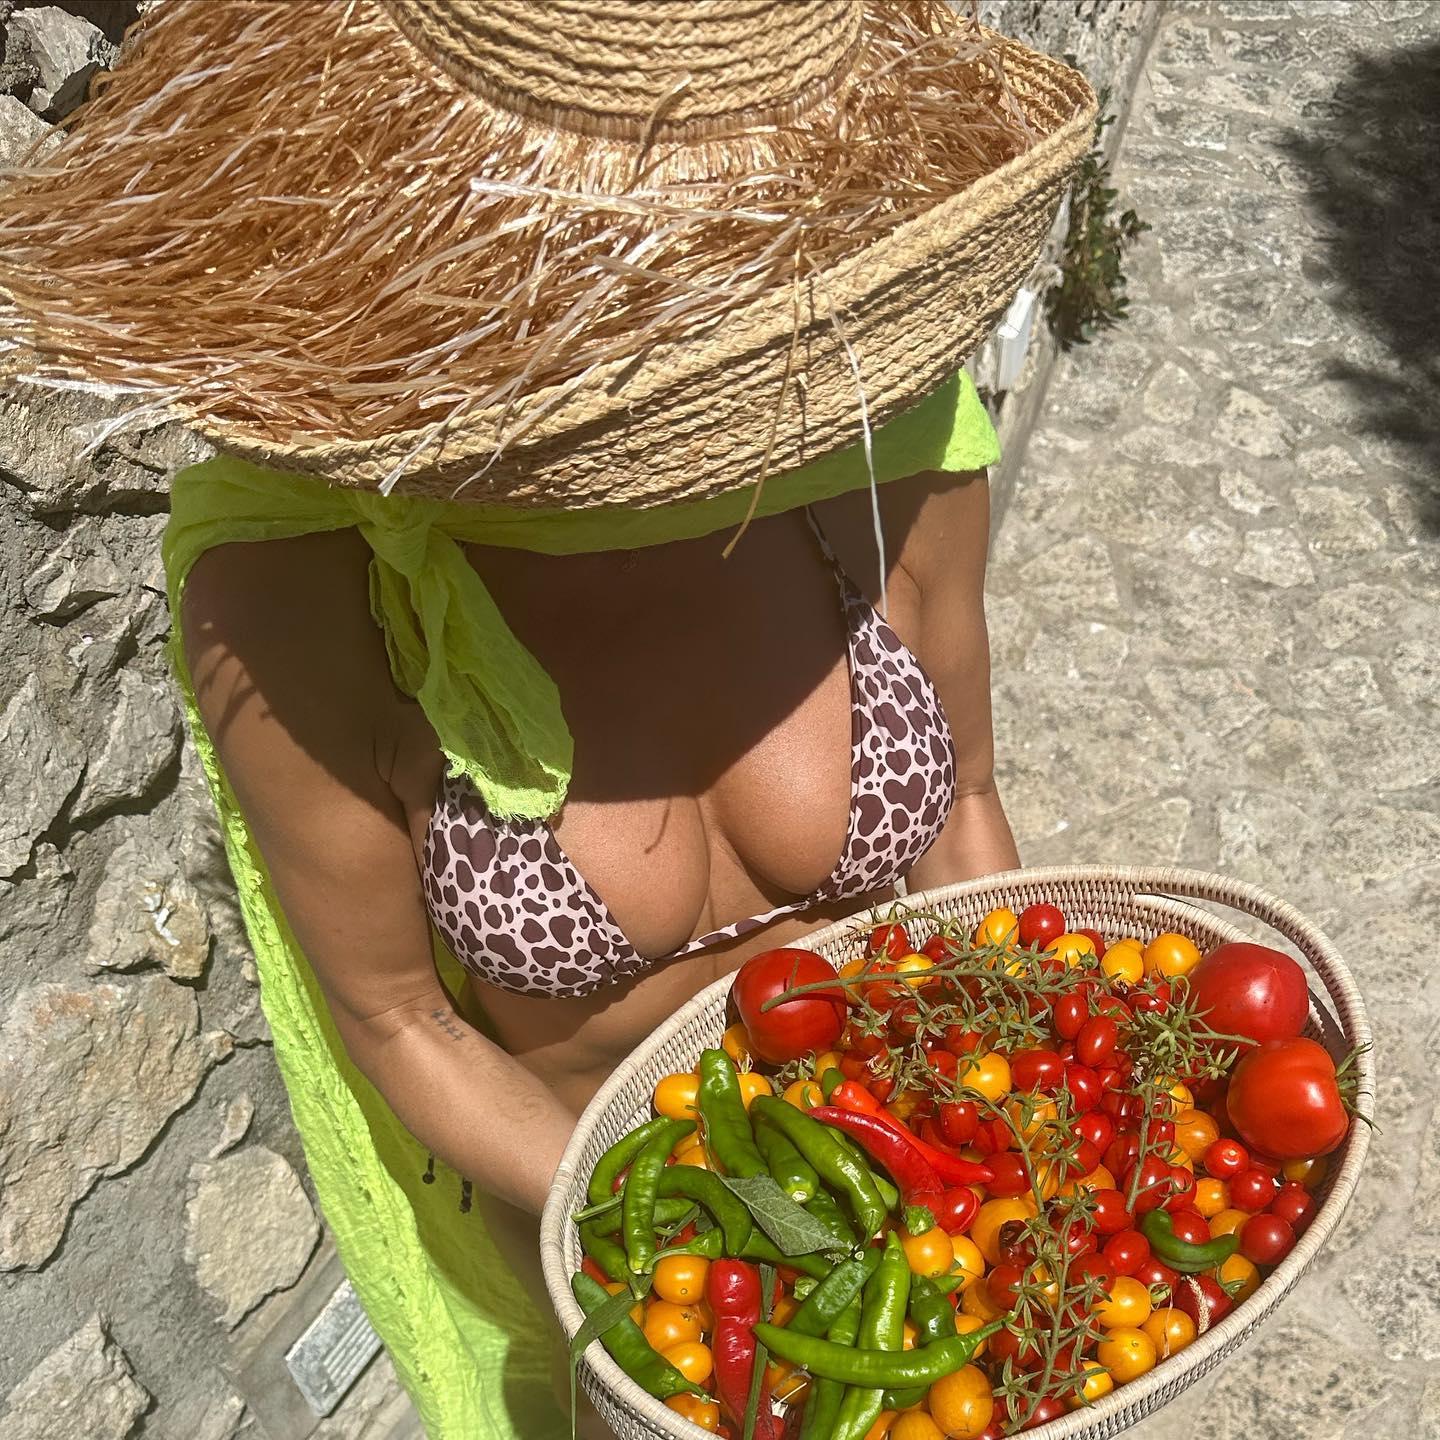 Heidi Klum shows off fruit in bikini